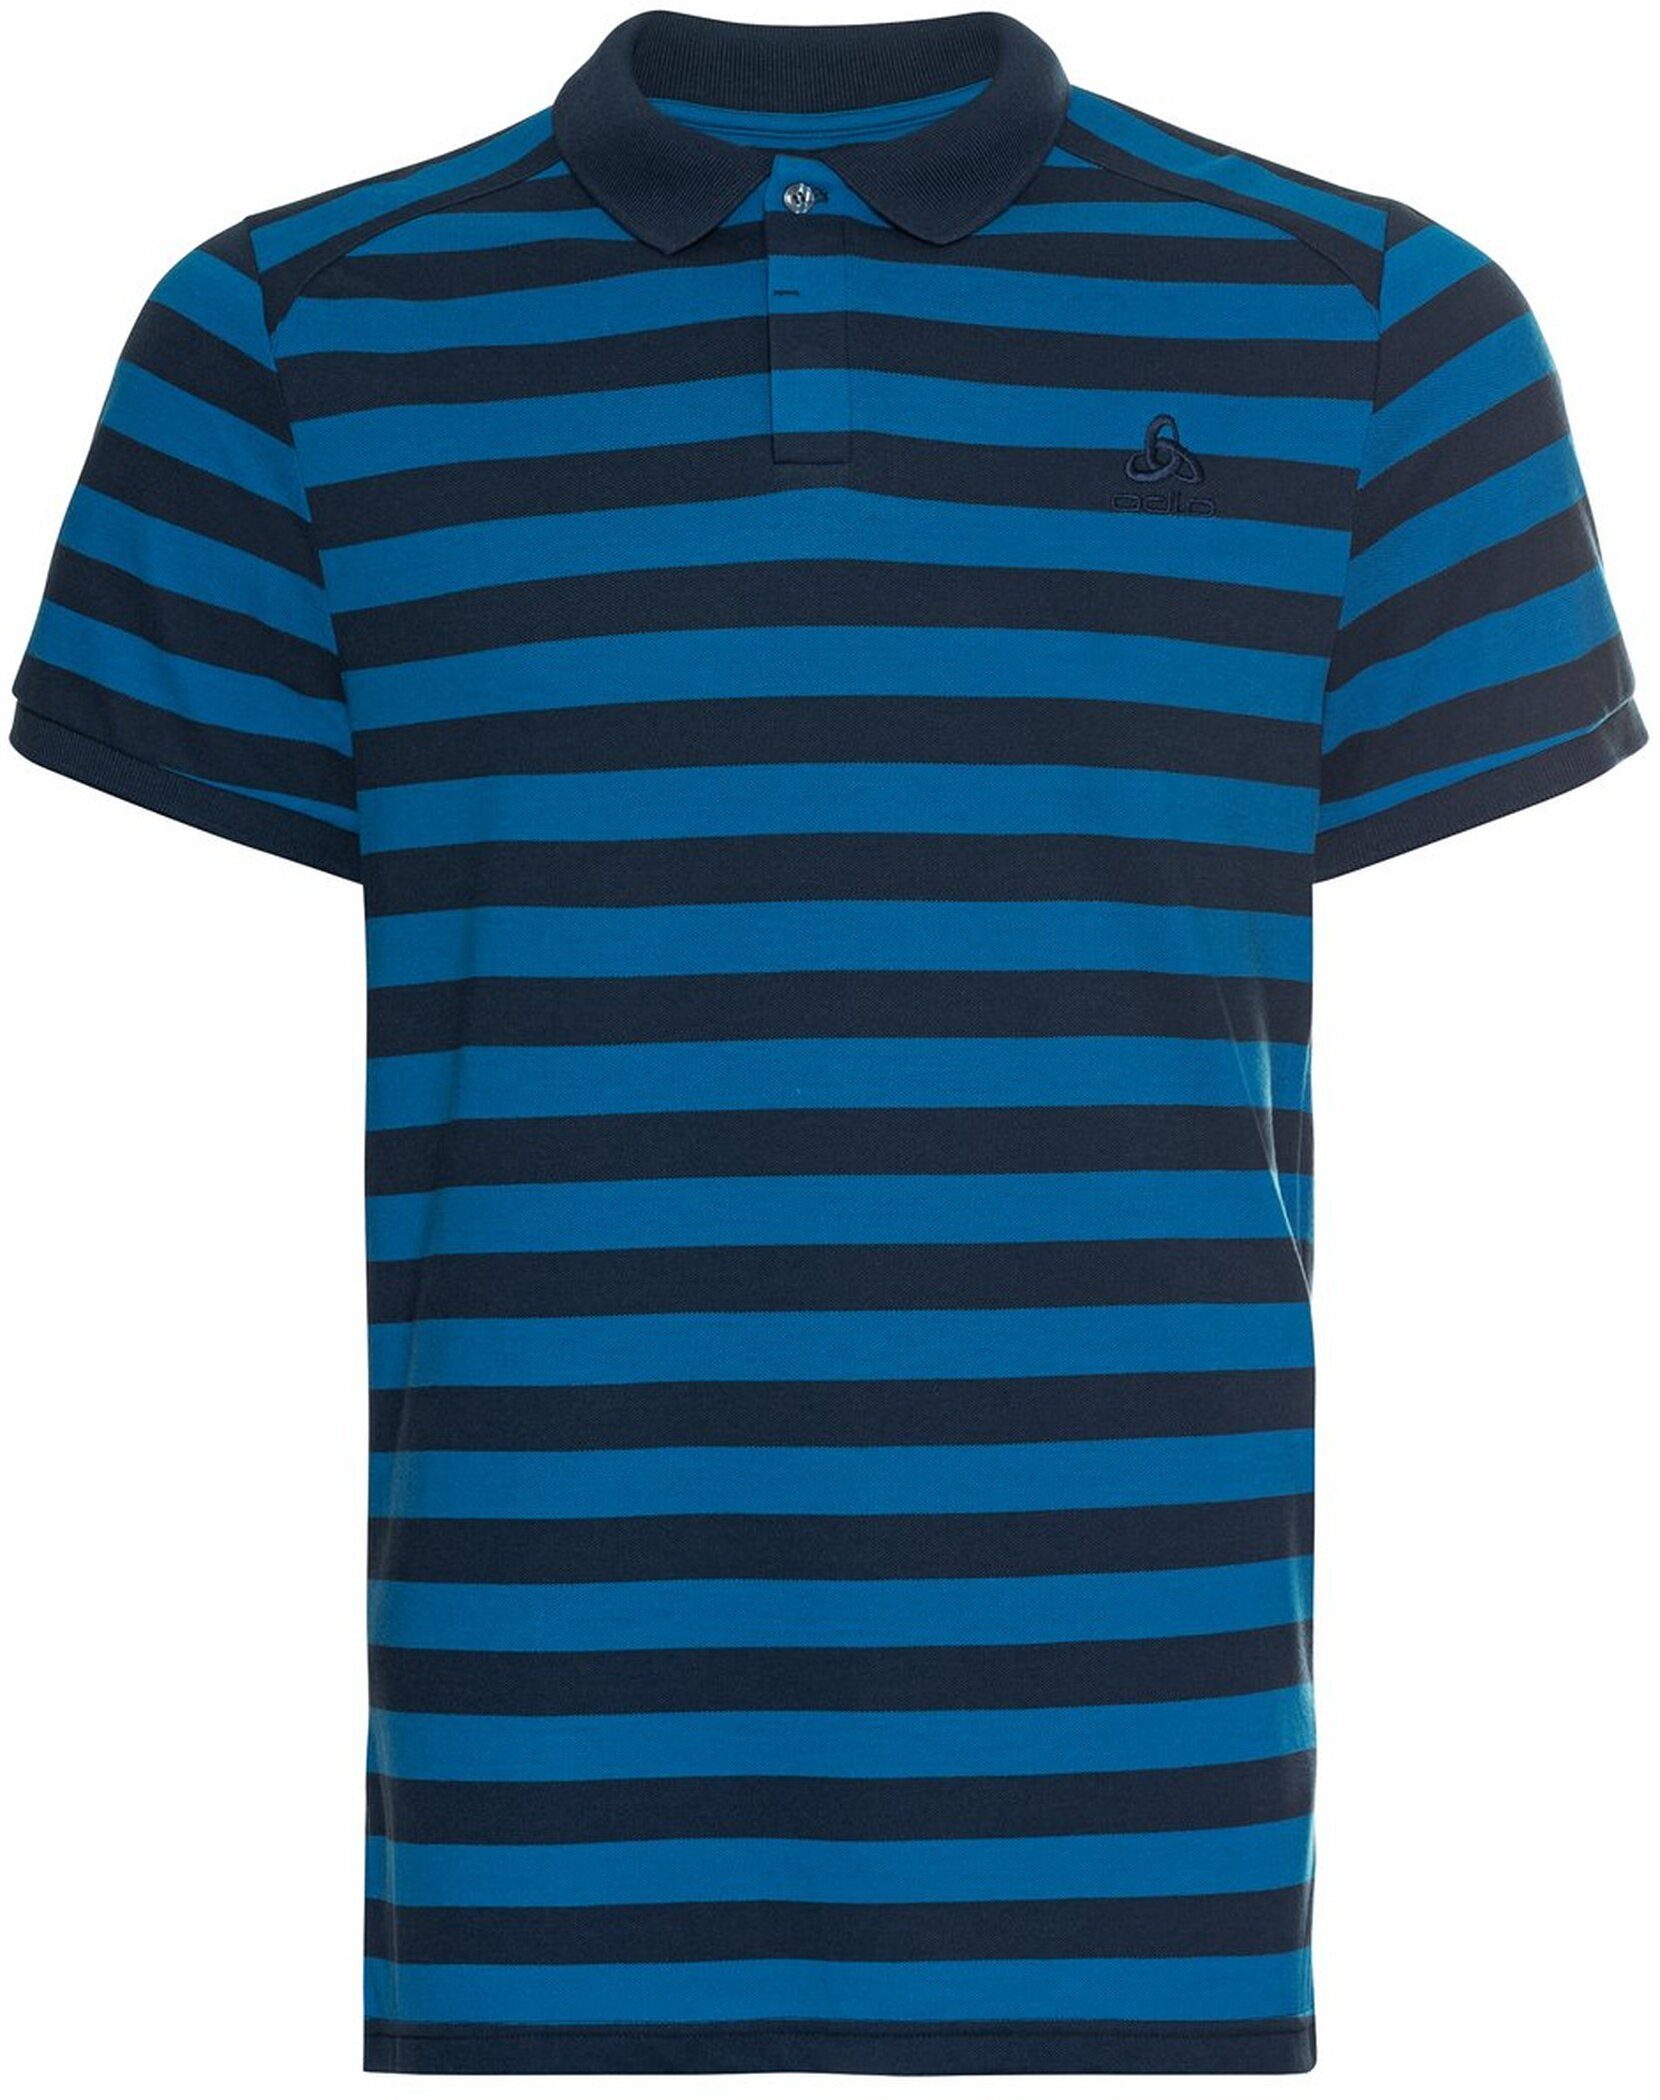 Odlo Poloshirt Polo shirt s/s CONCORD 20879 indigo bunting - blue wi